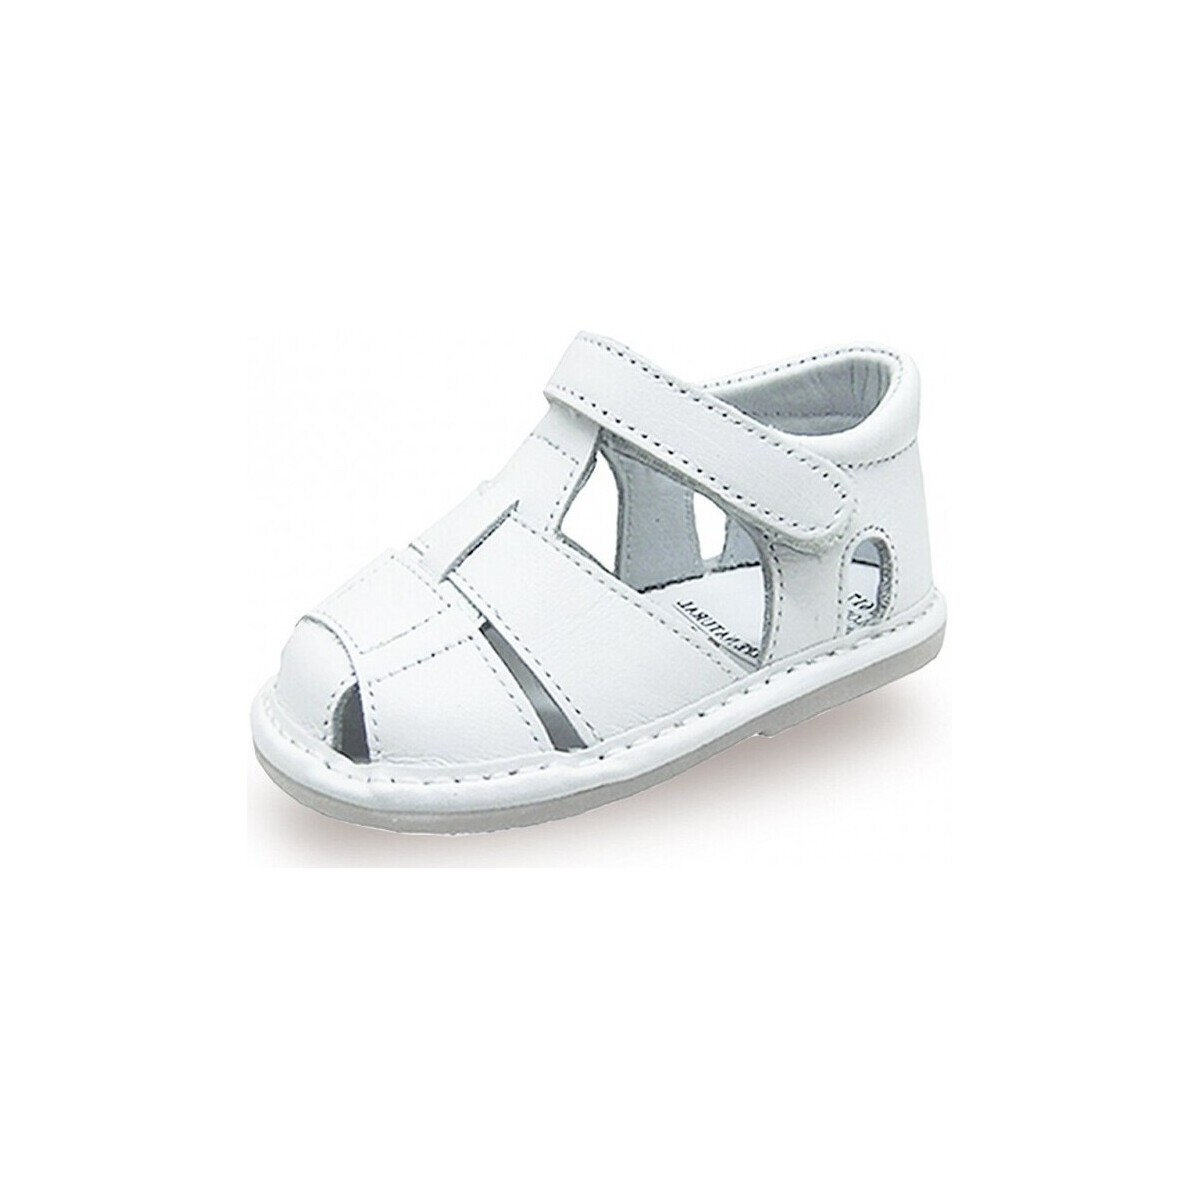 Zapatos Sandalias Colores 21848-15 Blanco